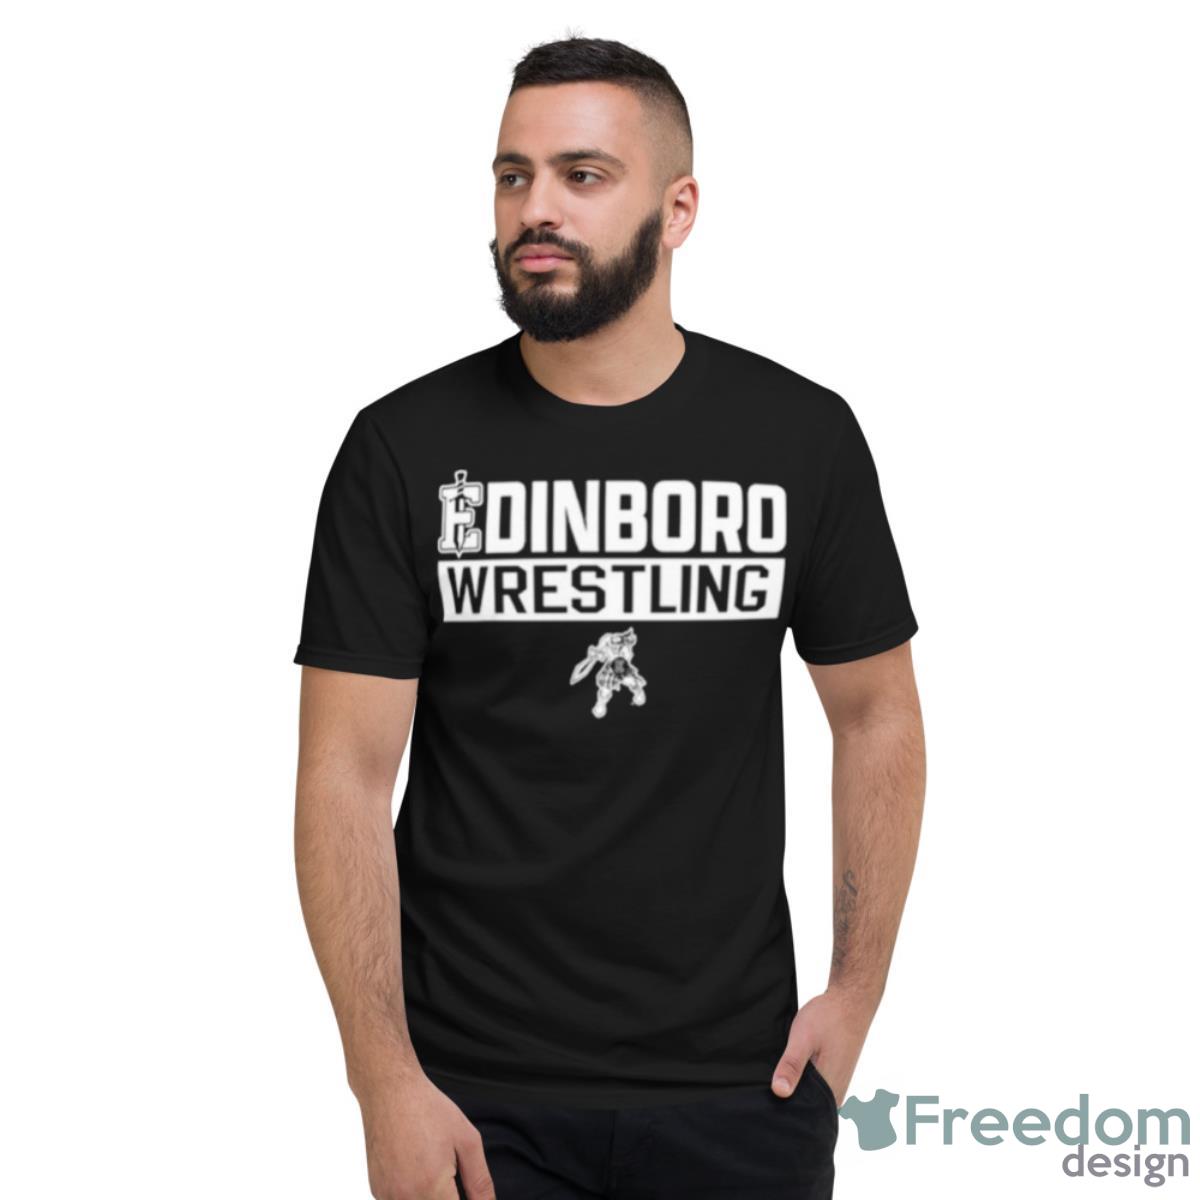 Edinboro Wrestling Shirt